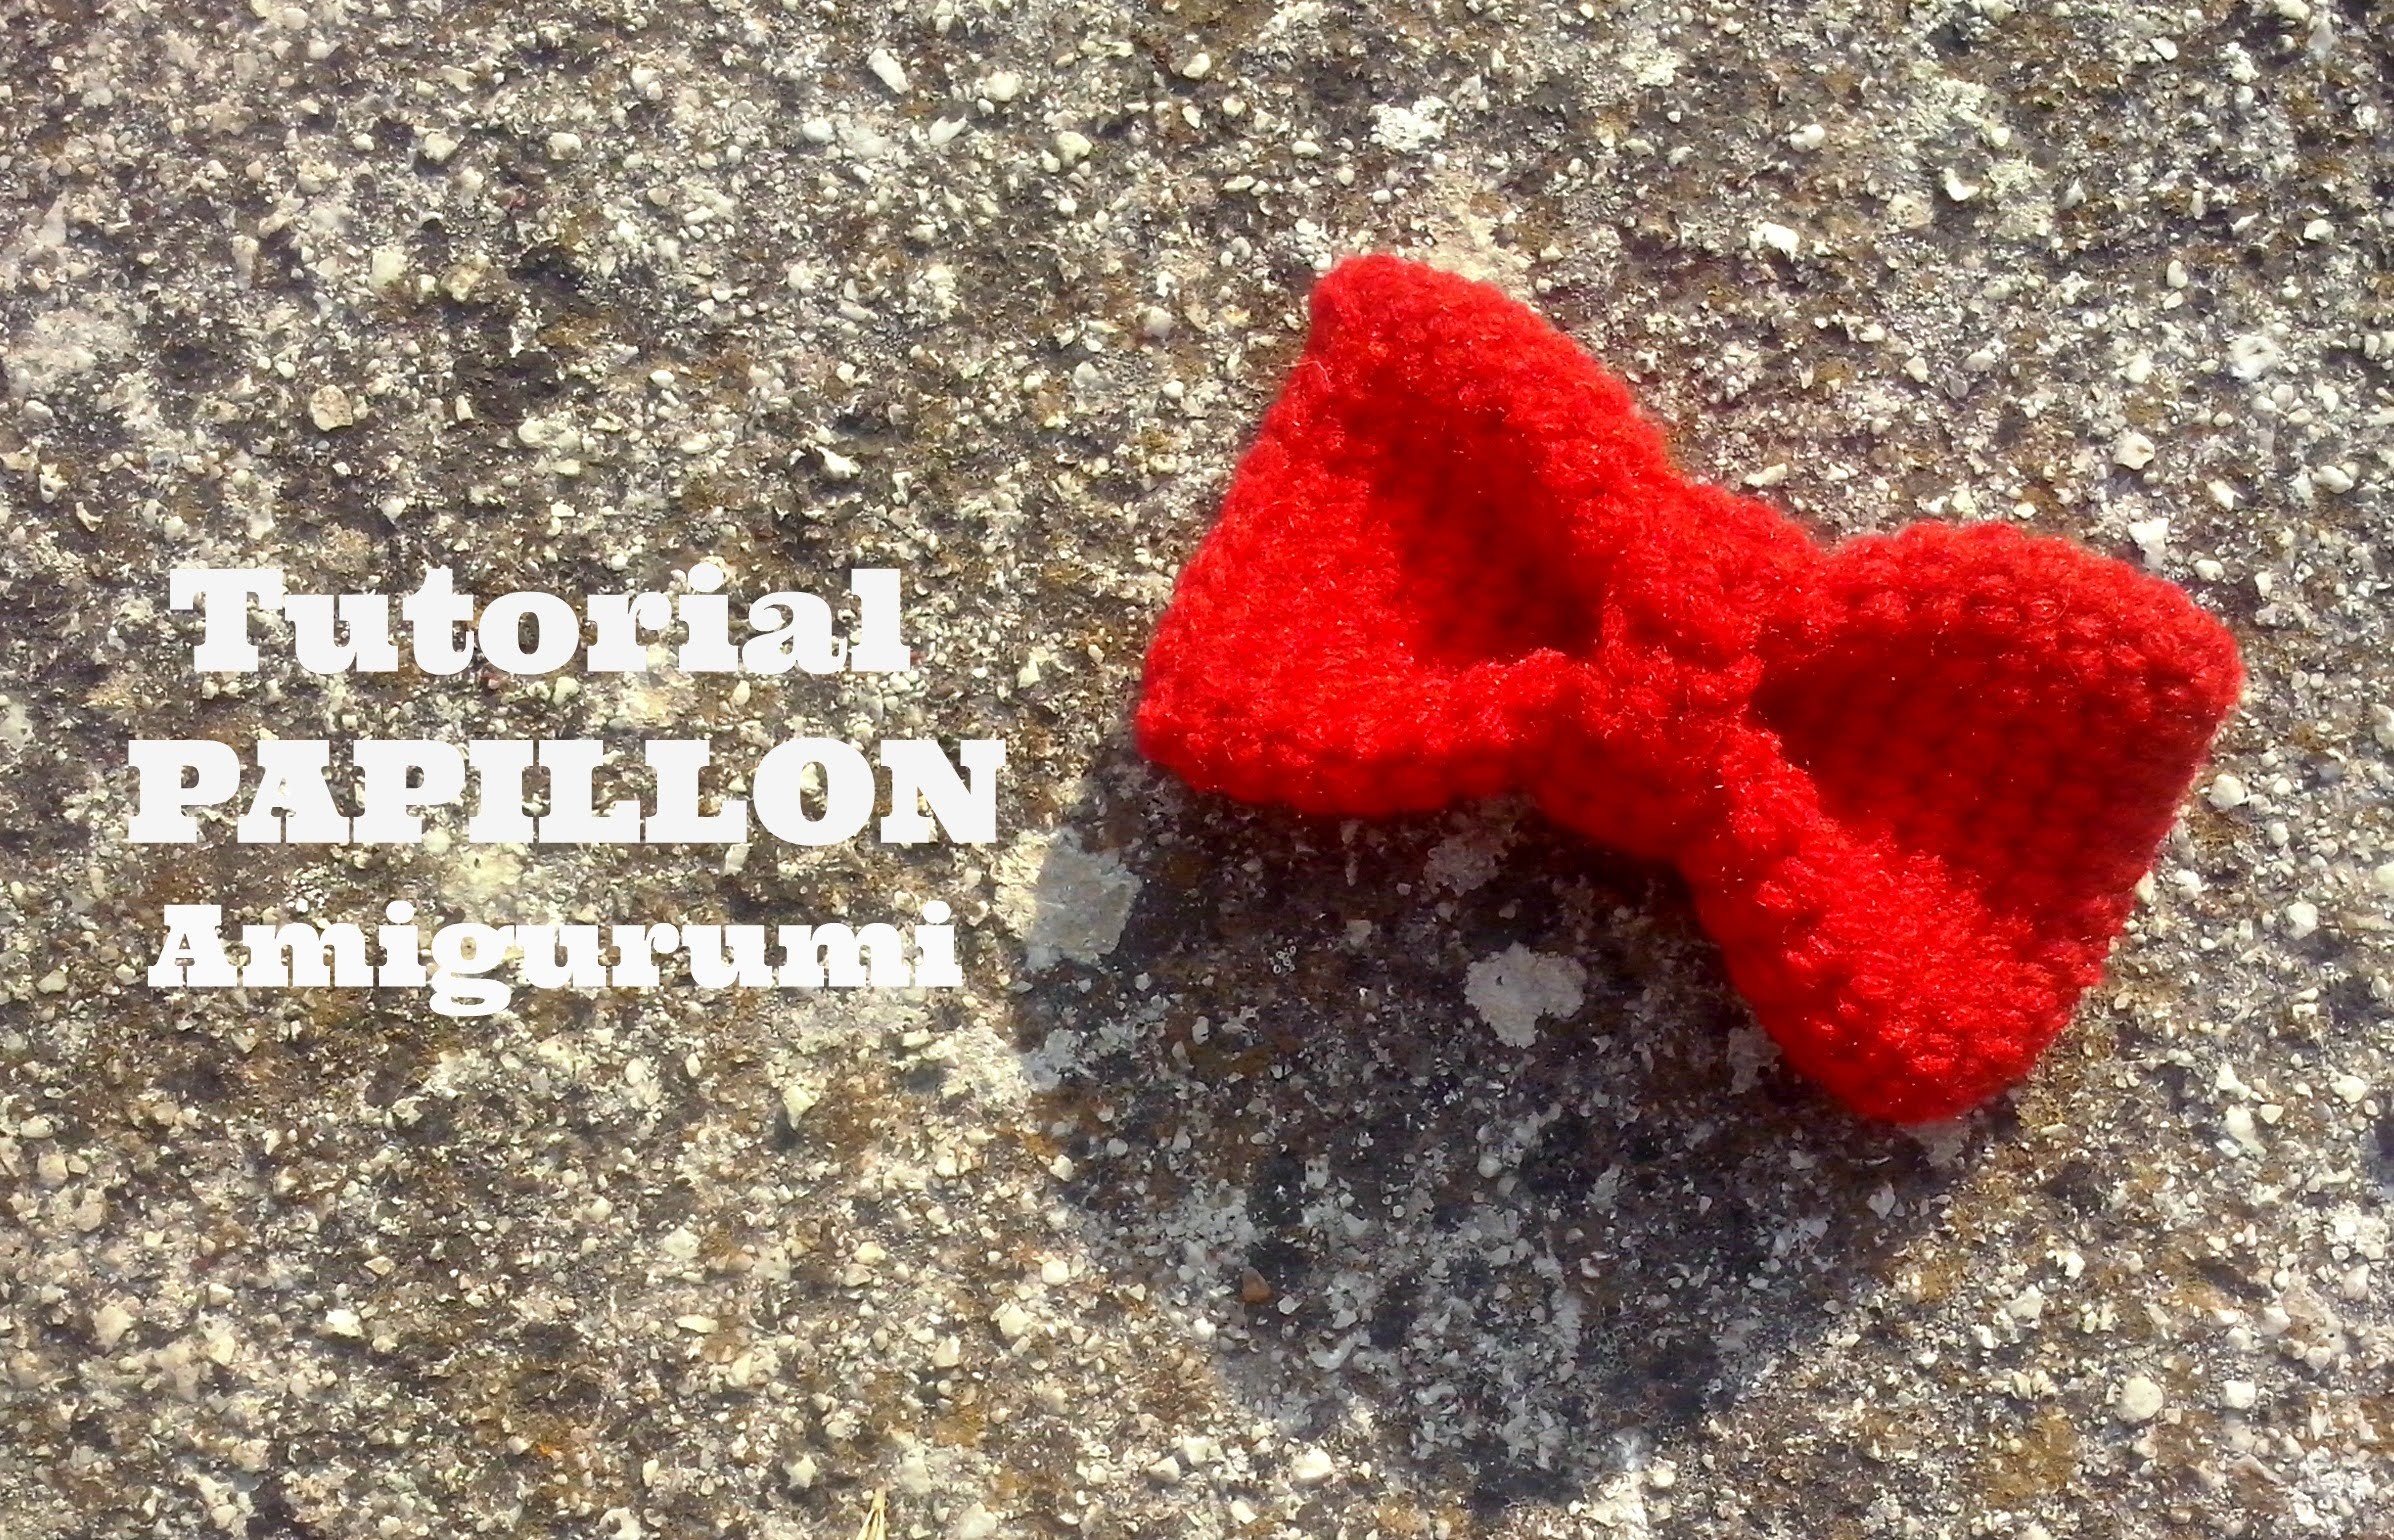 Tutorial PAPILLON Amigurumi | How to crochet a PAPILLON Amigurumi